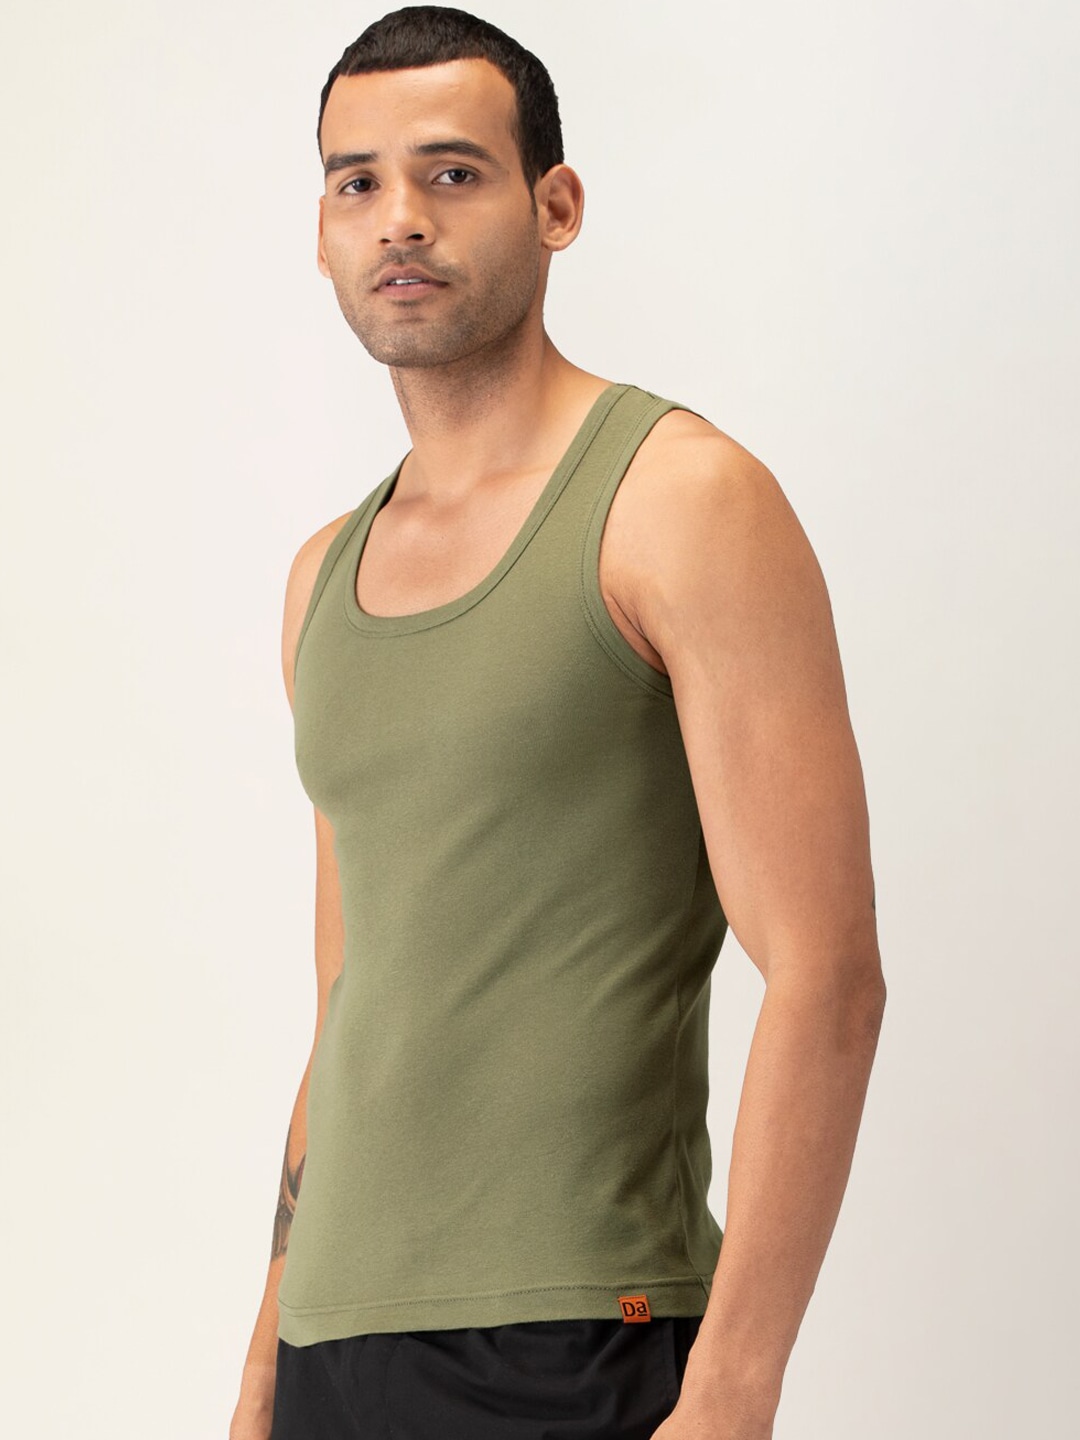 Clothing Innerwear Vests | DAMENSCH Men Olive-Green Solid Pure Cotton NEO-SKIN Anti-Microbial Basic Innerwear Vest - LS95493